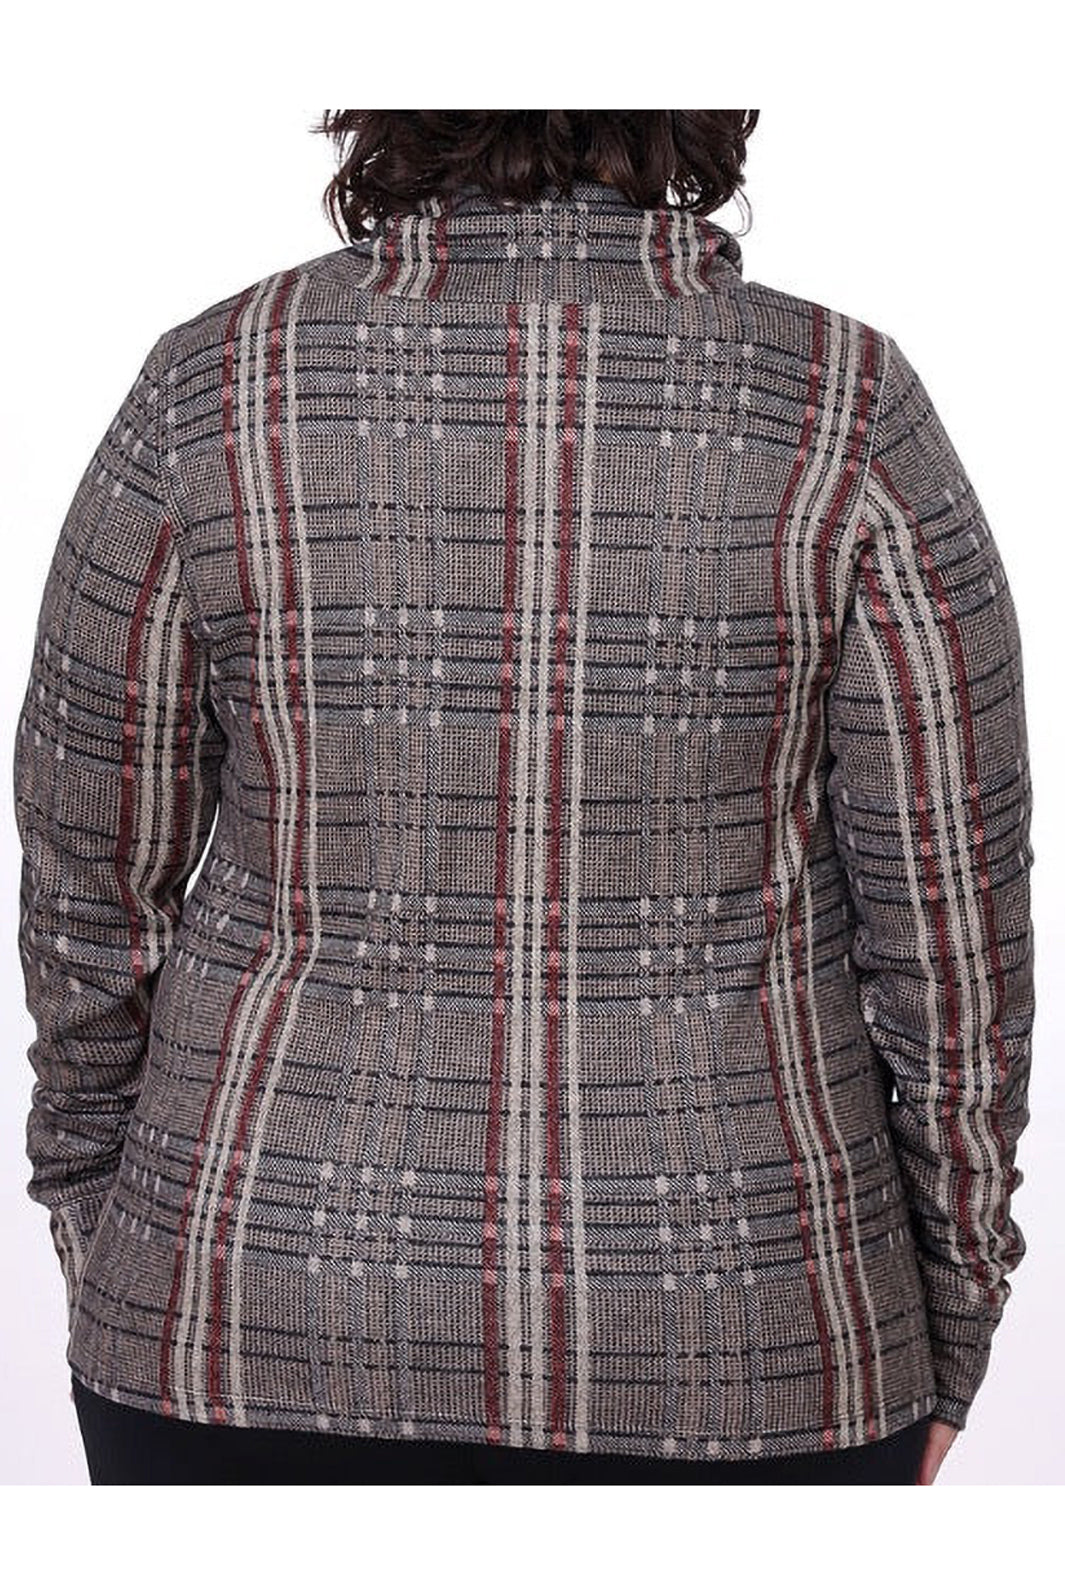 Plus Size Galaxy Long Sleeve Sweater by Sportive Plus